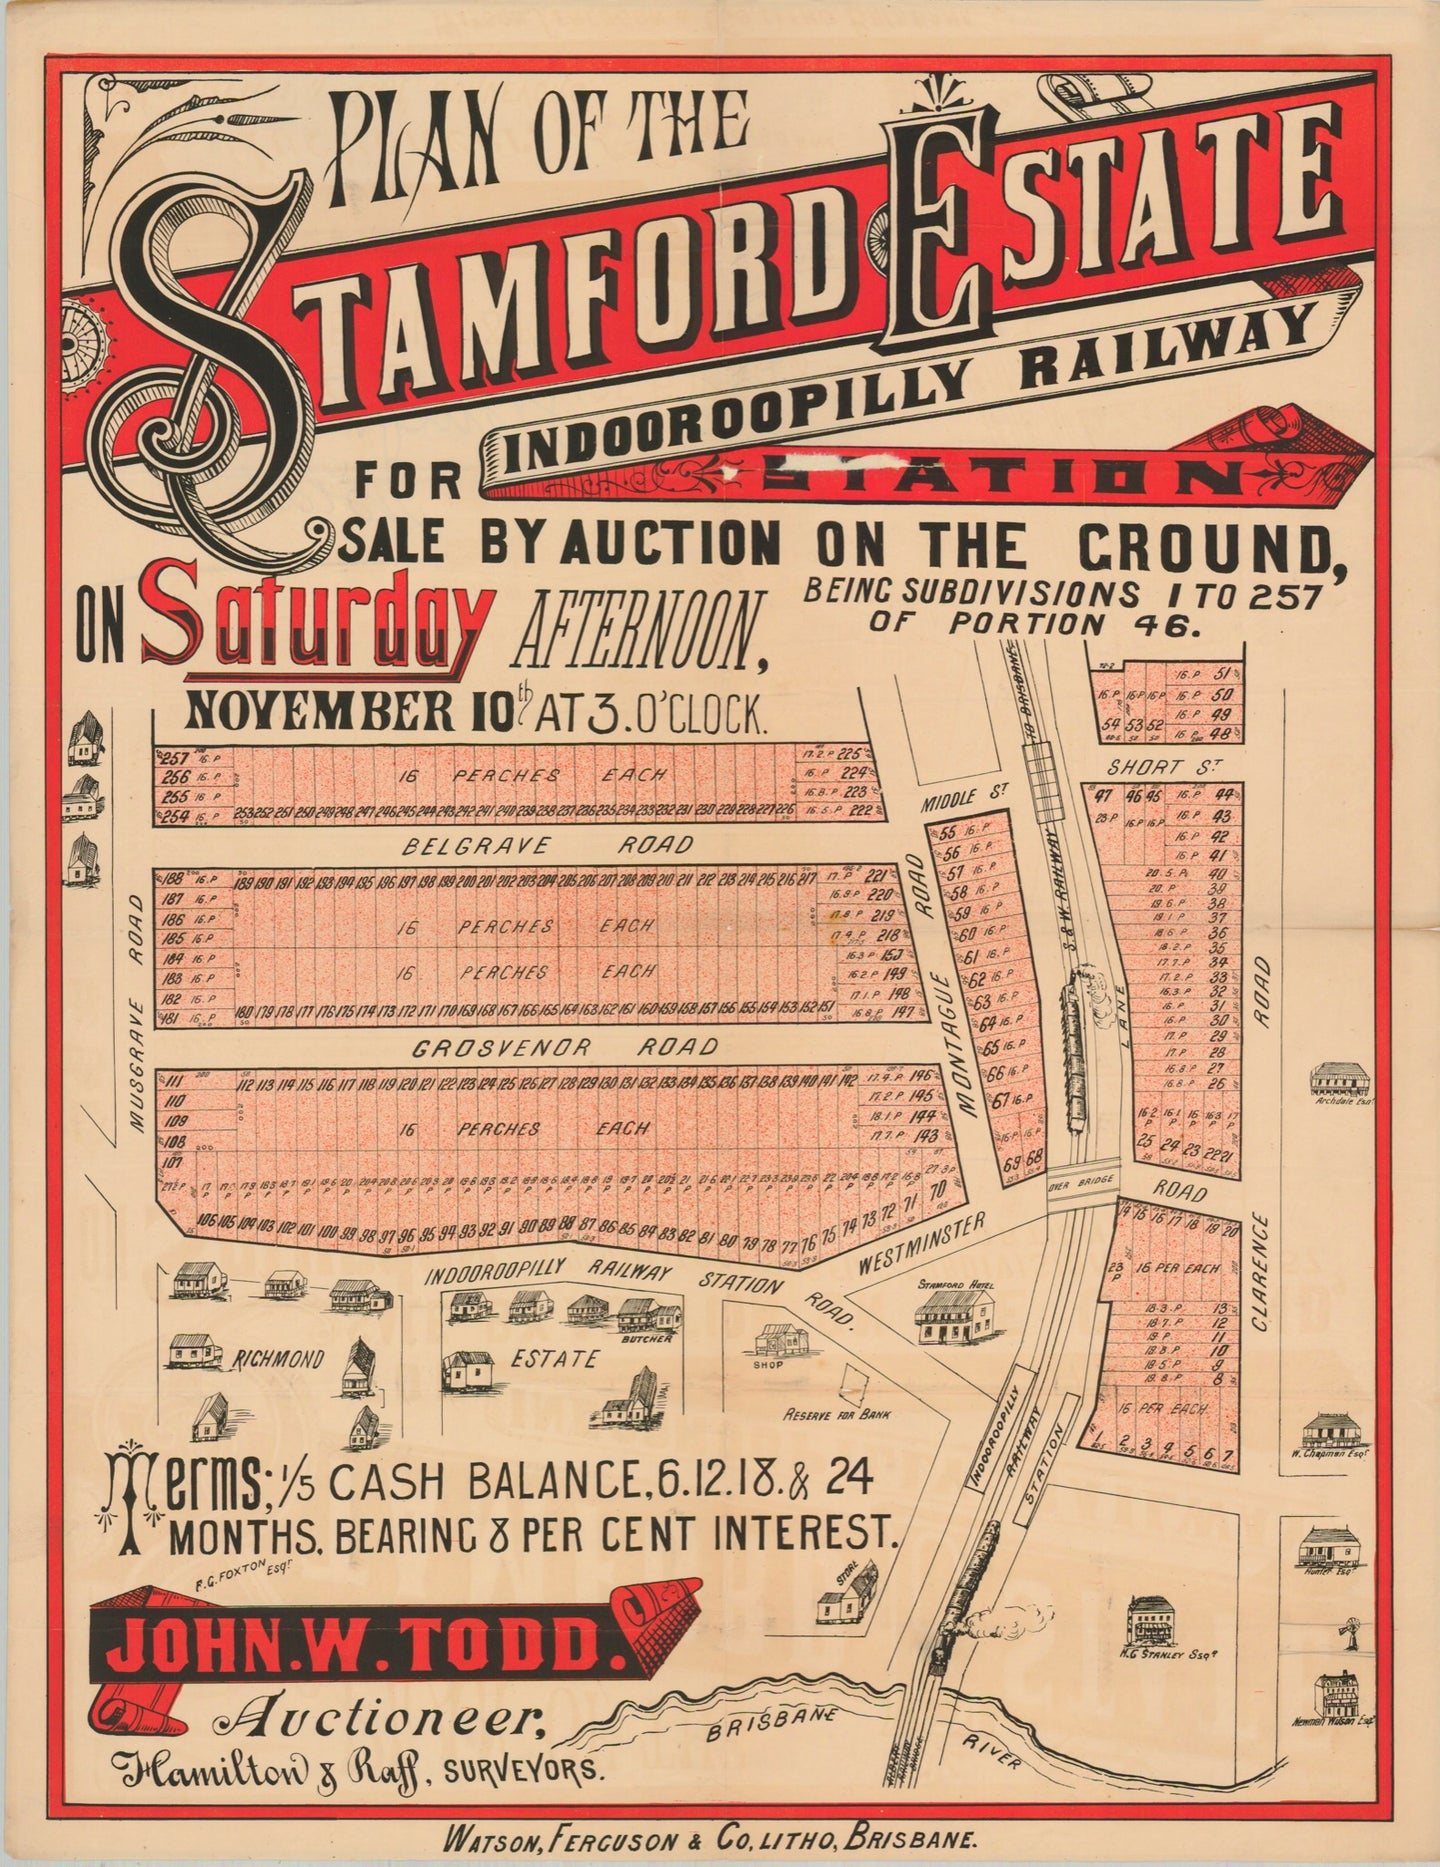 Stamford Estate - Indooroopilly Railway Station